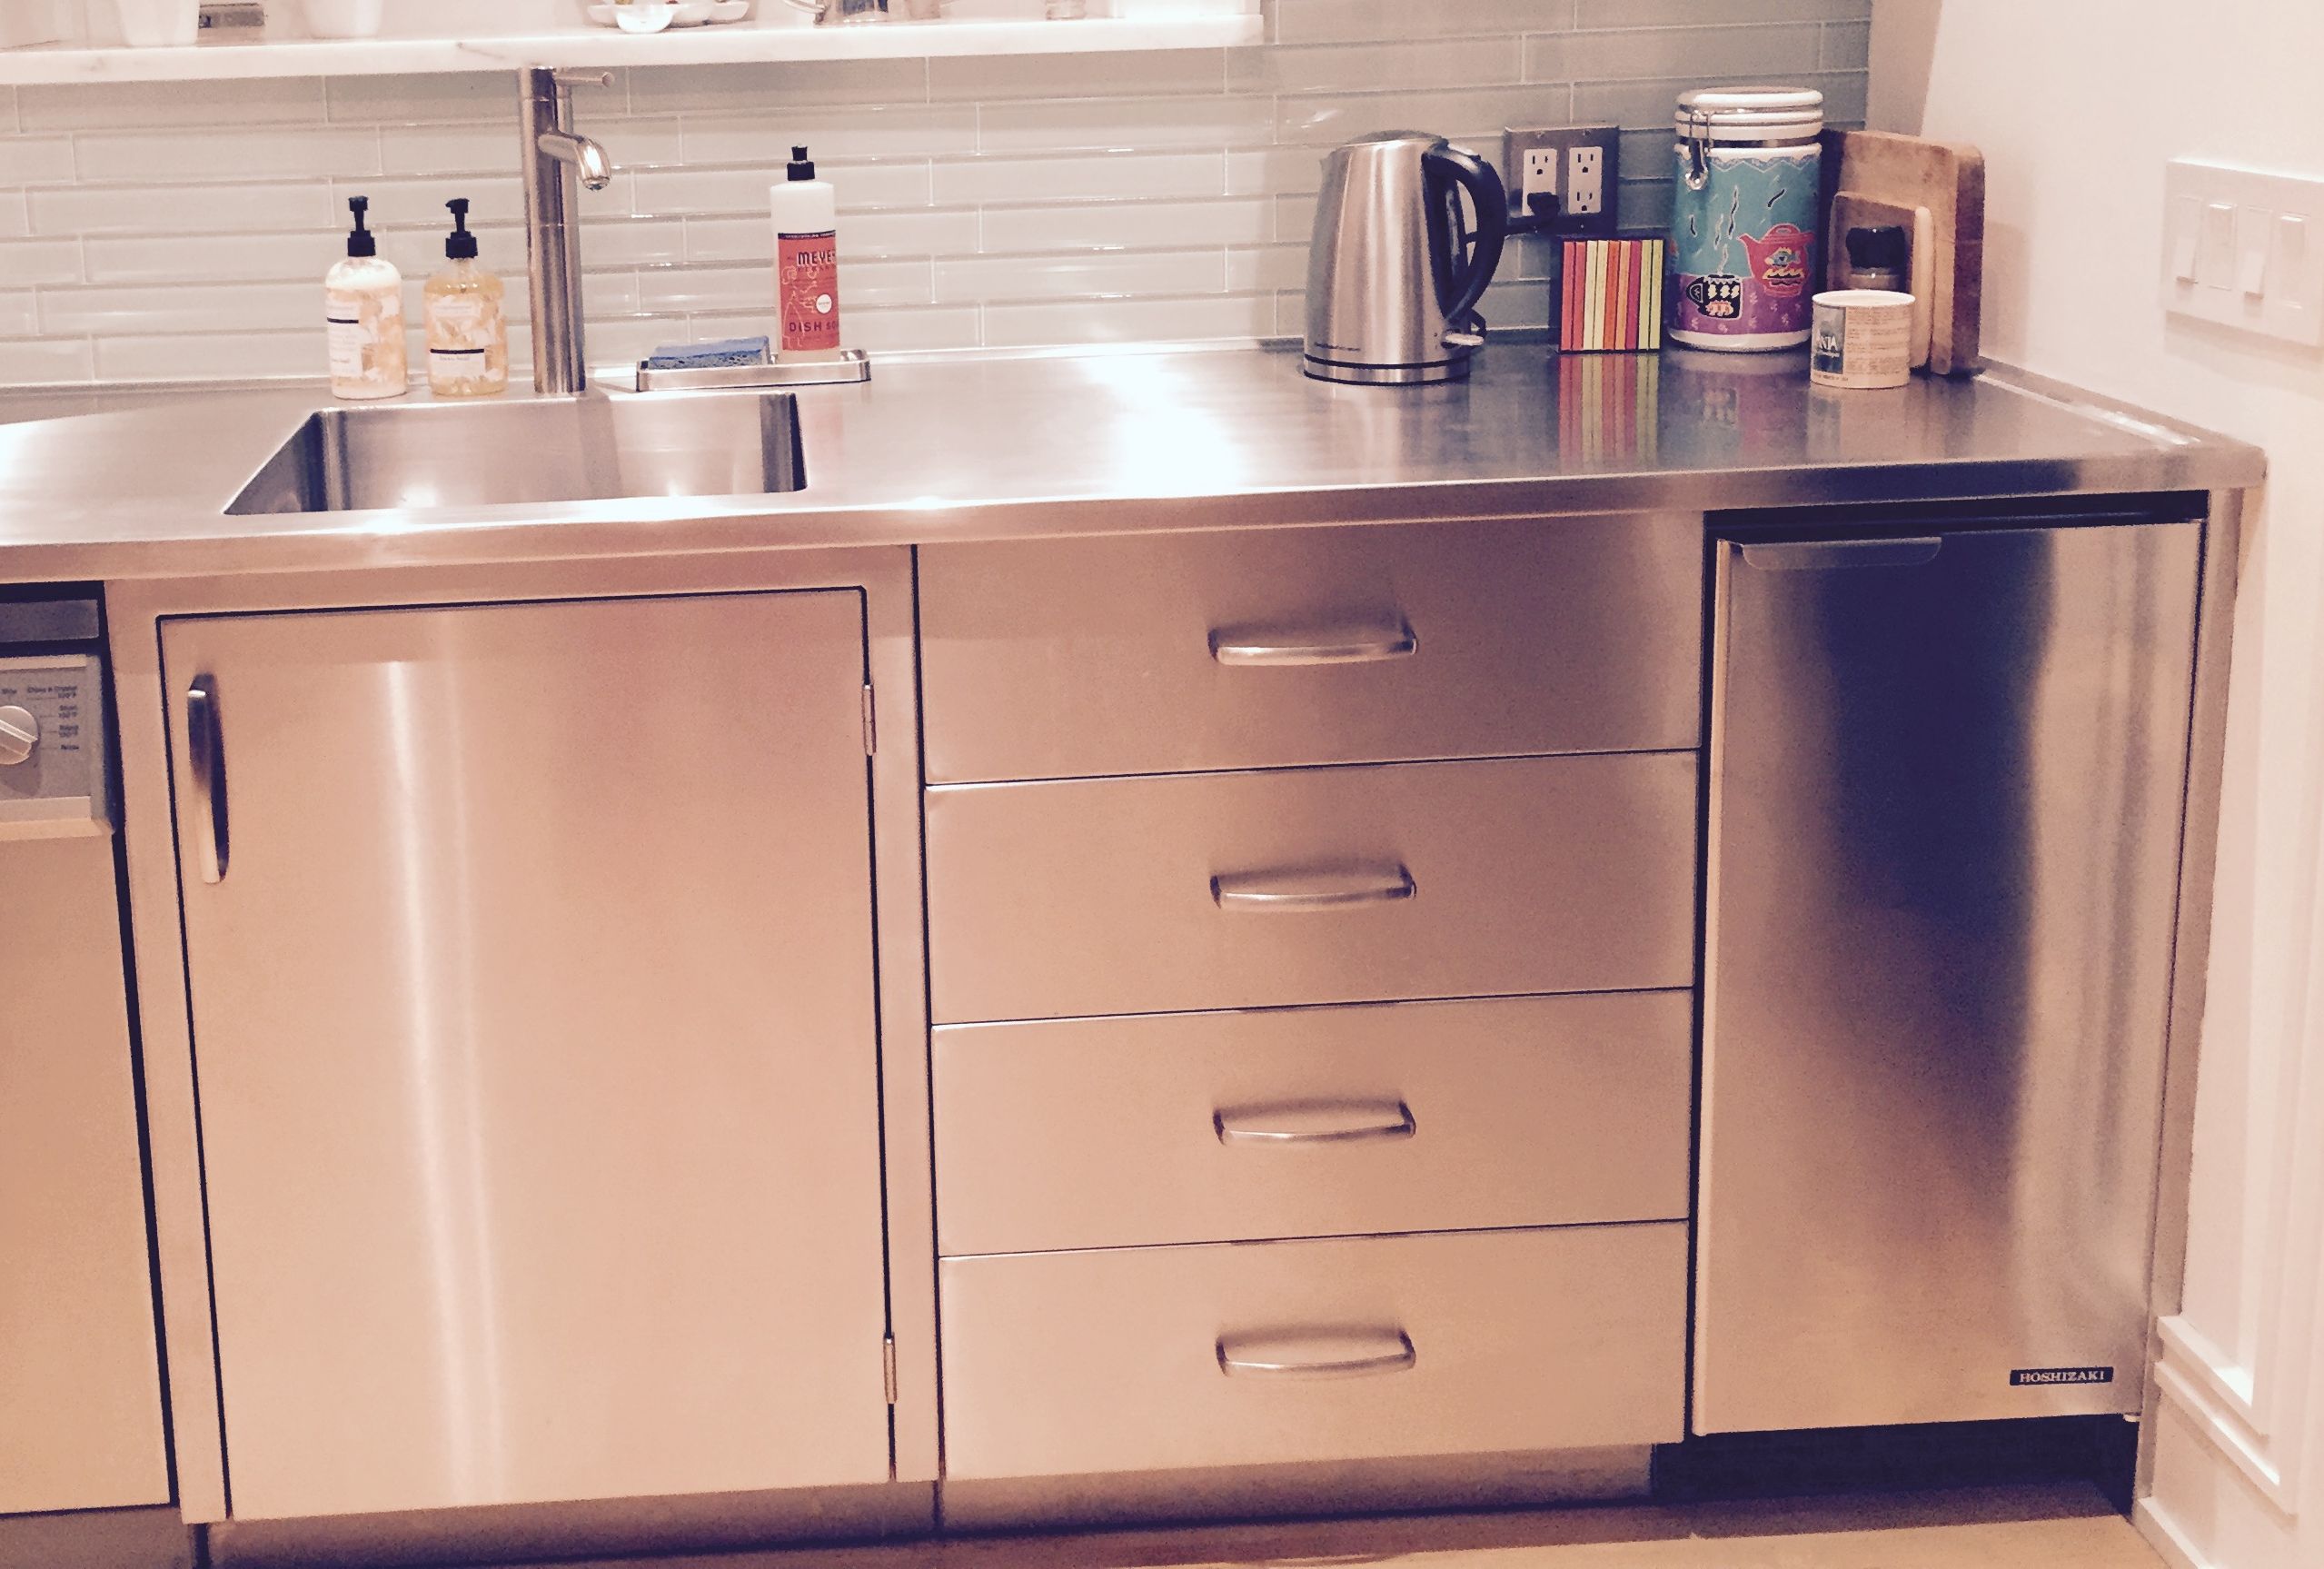 stainless steel kitchen sink base cabinet